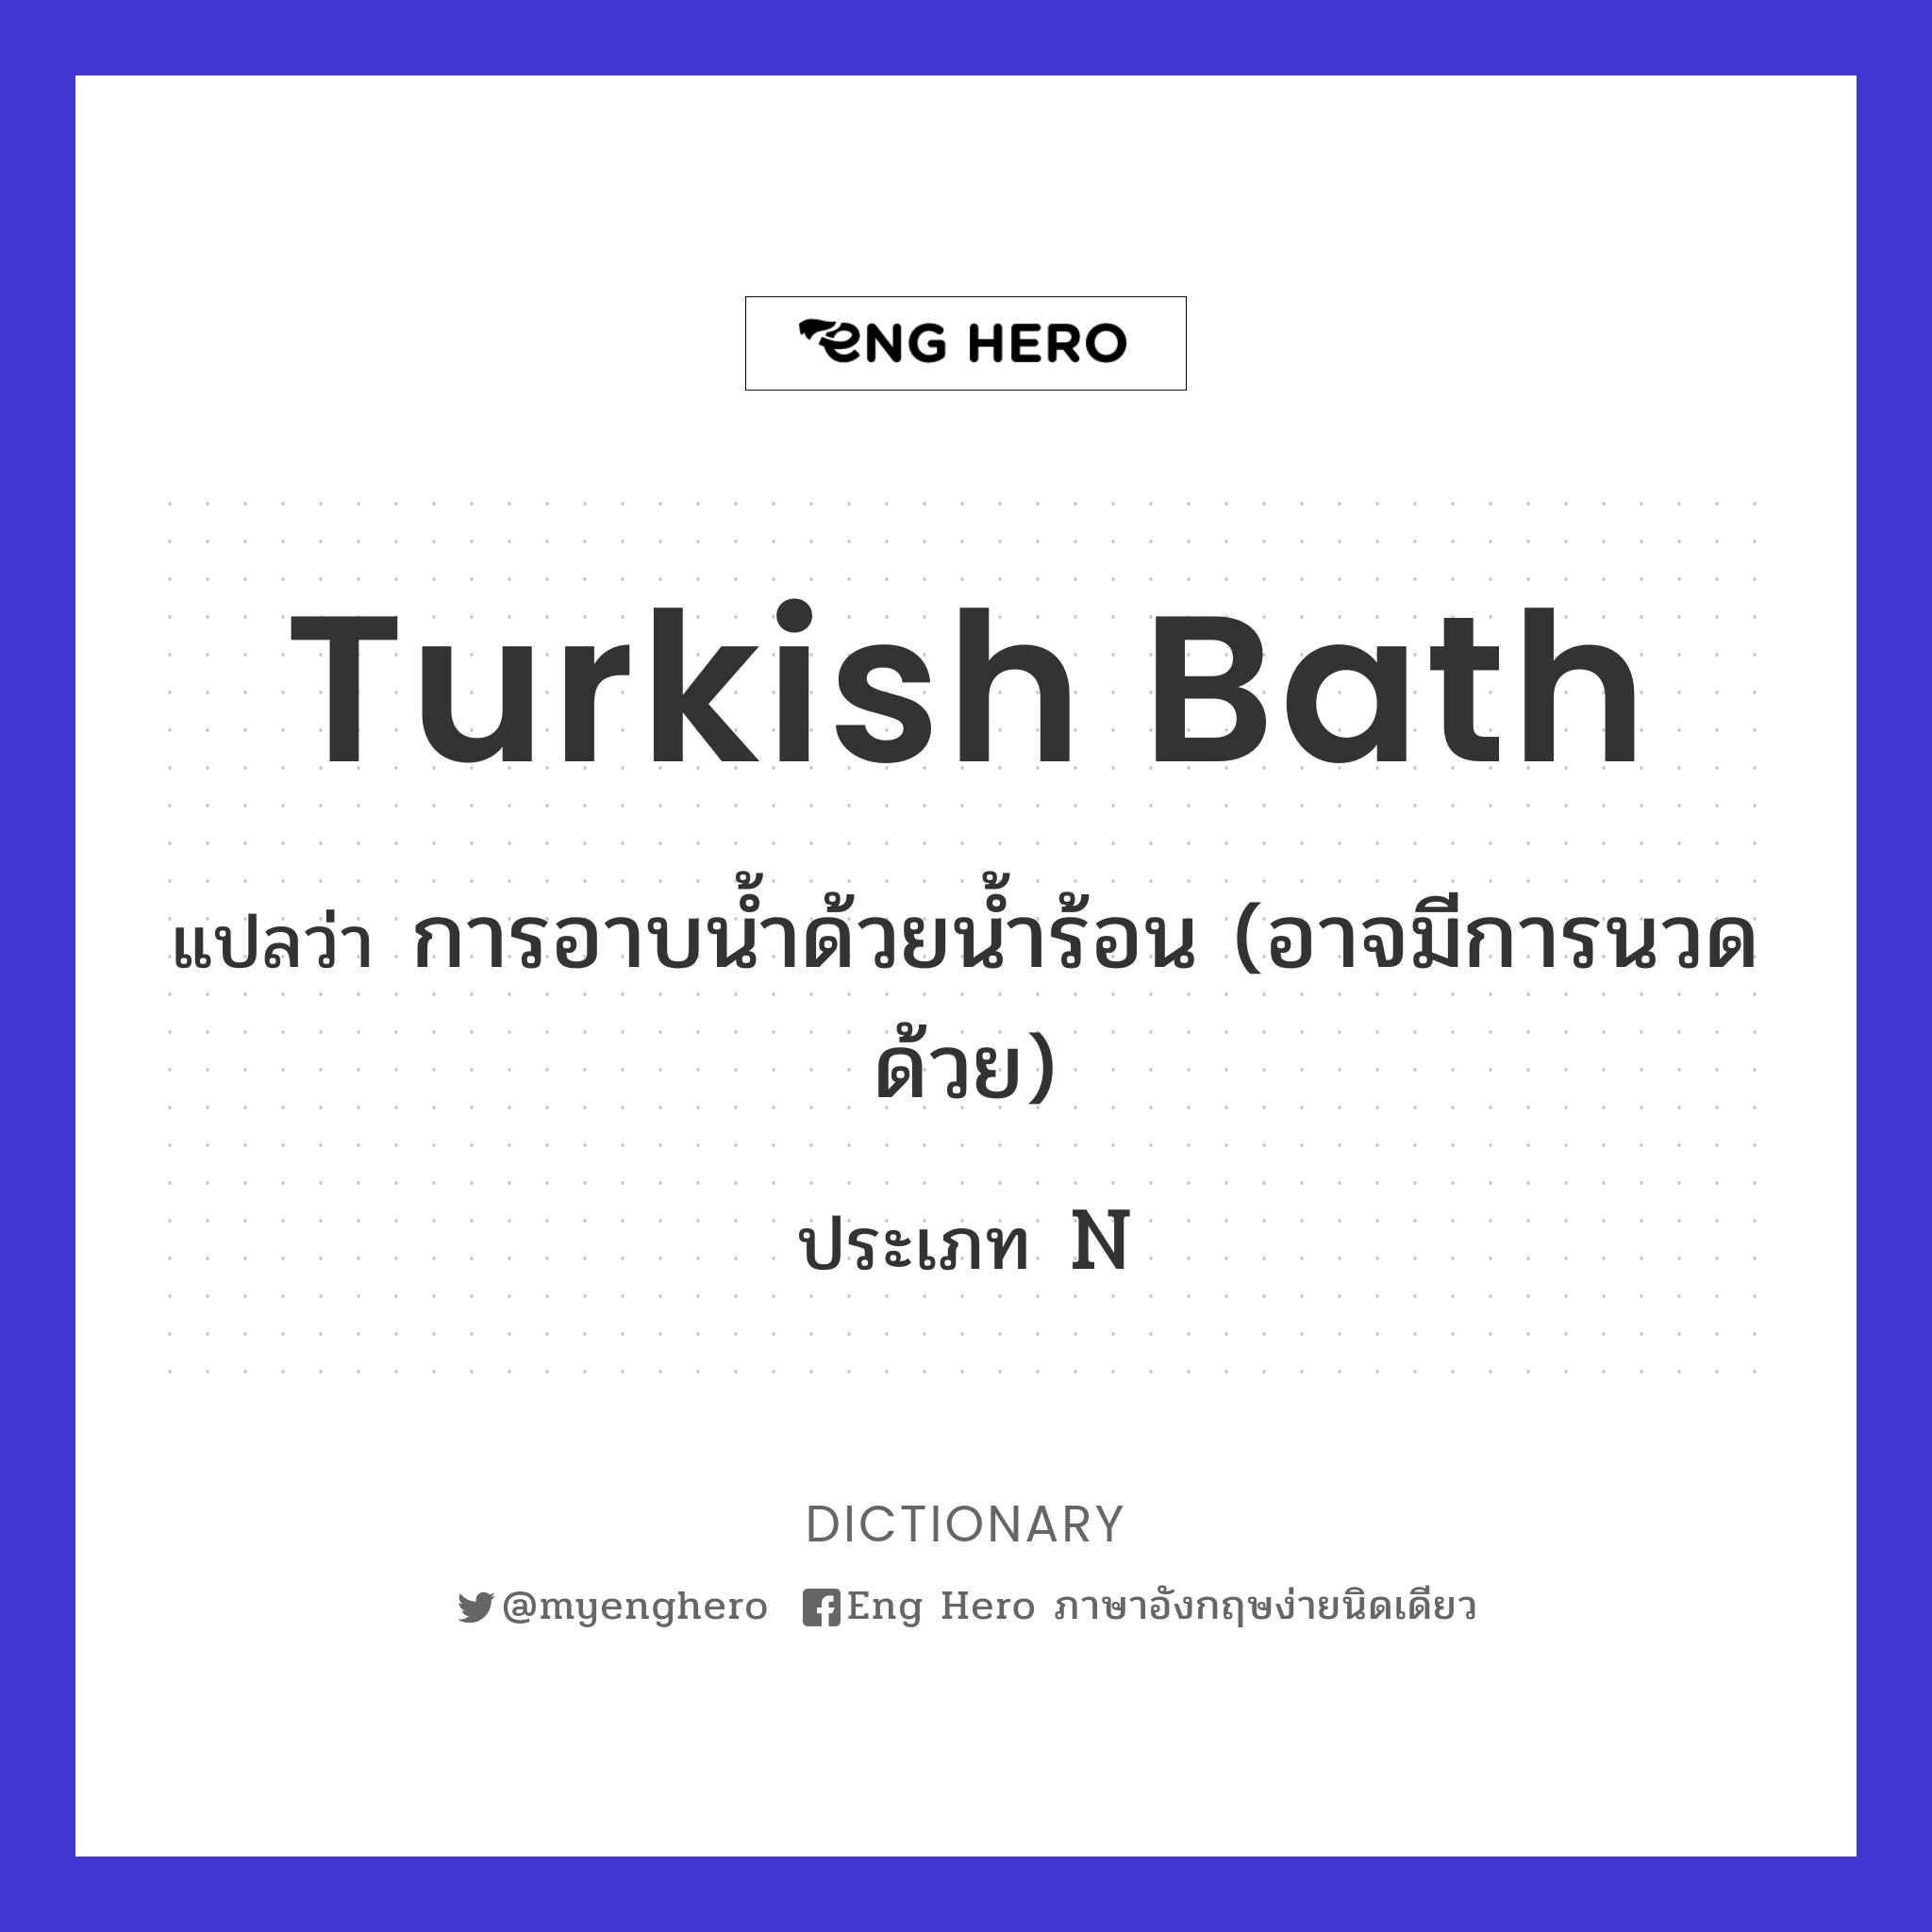 Turkish bath